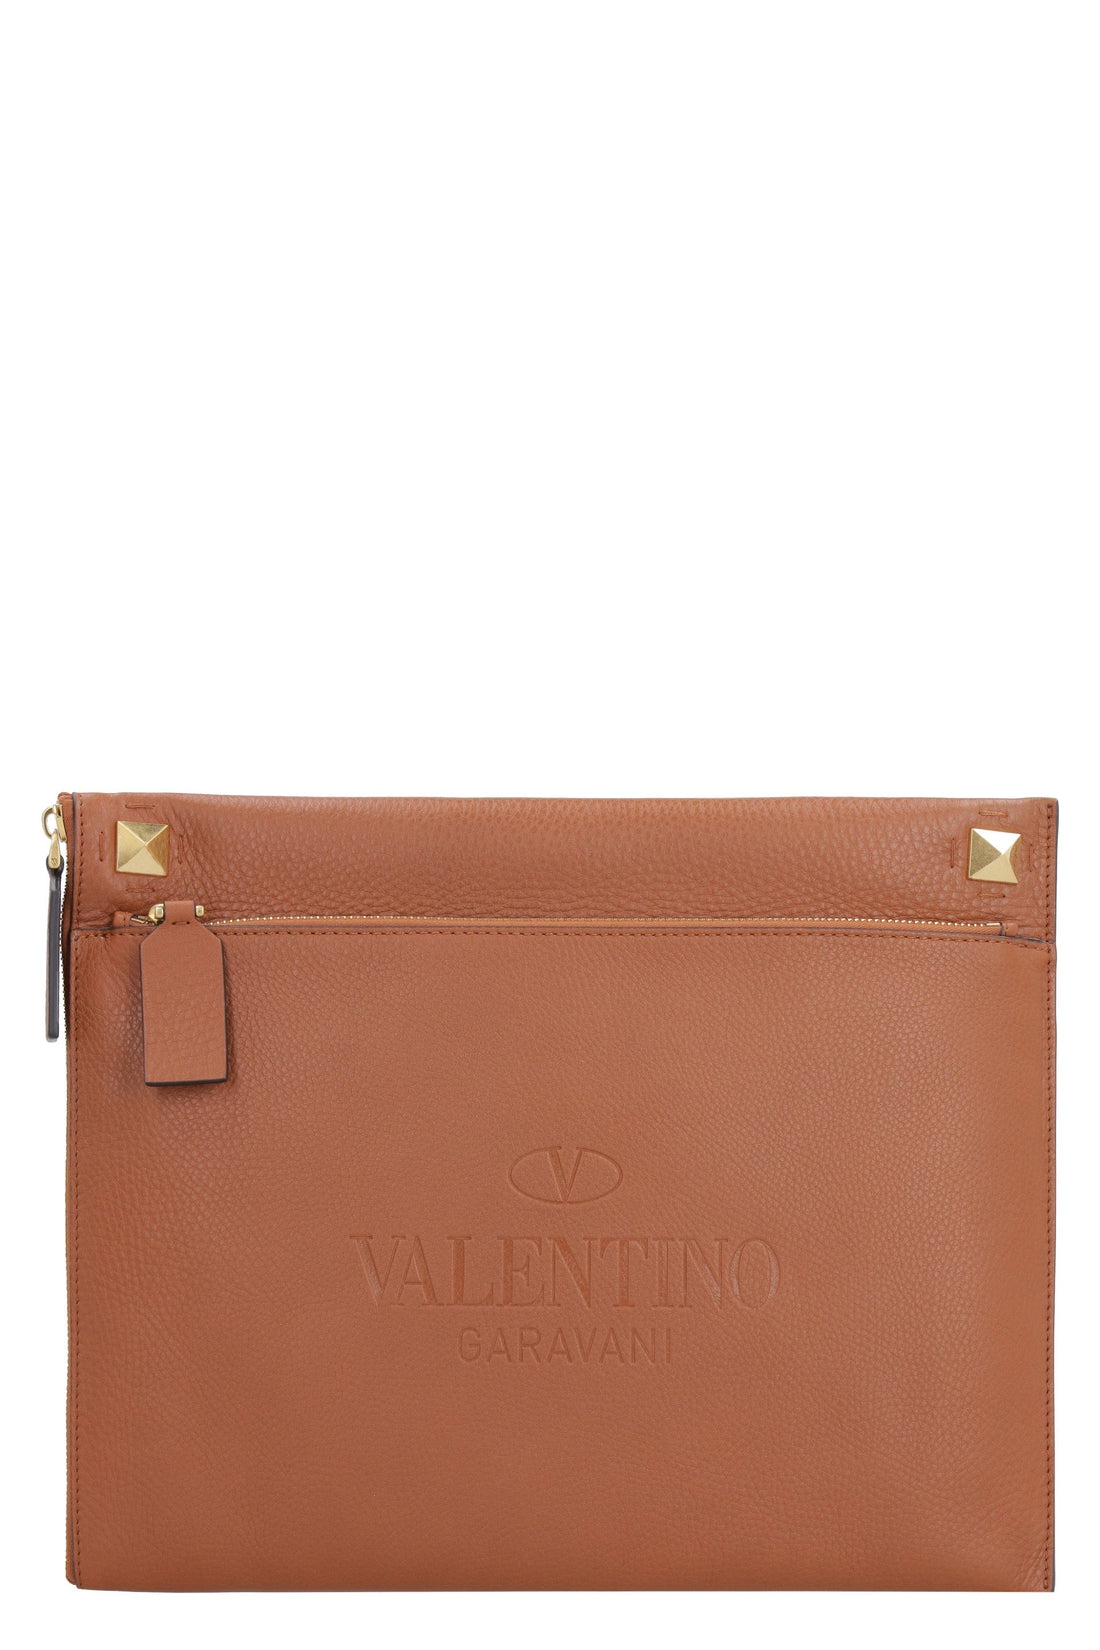 Valentino-OUTLET-SALE-Valentino Garavani - Identity leather flat pouch-ARCHIVIST